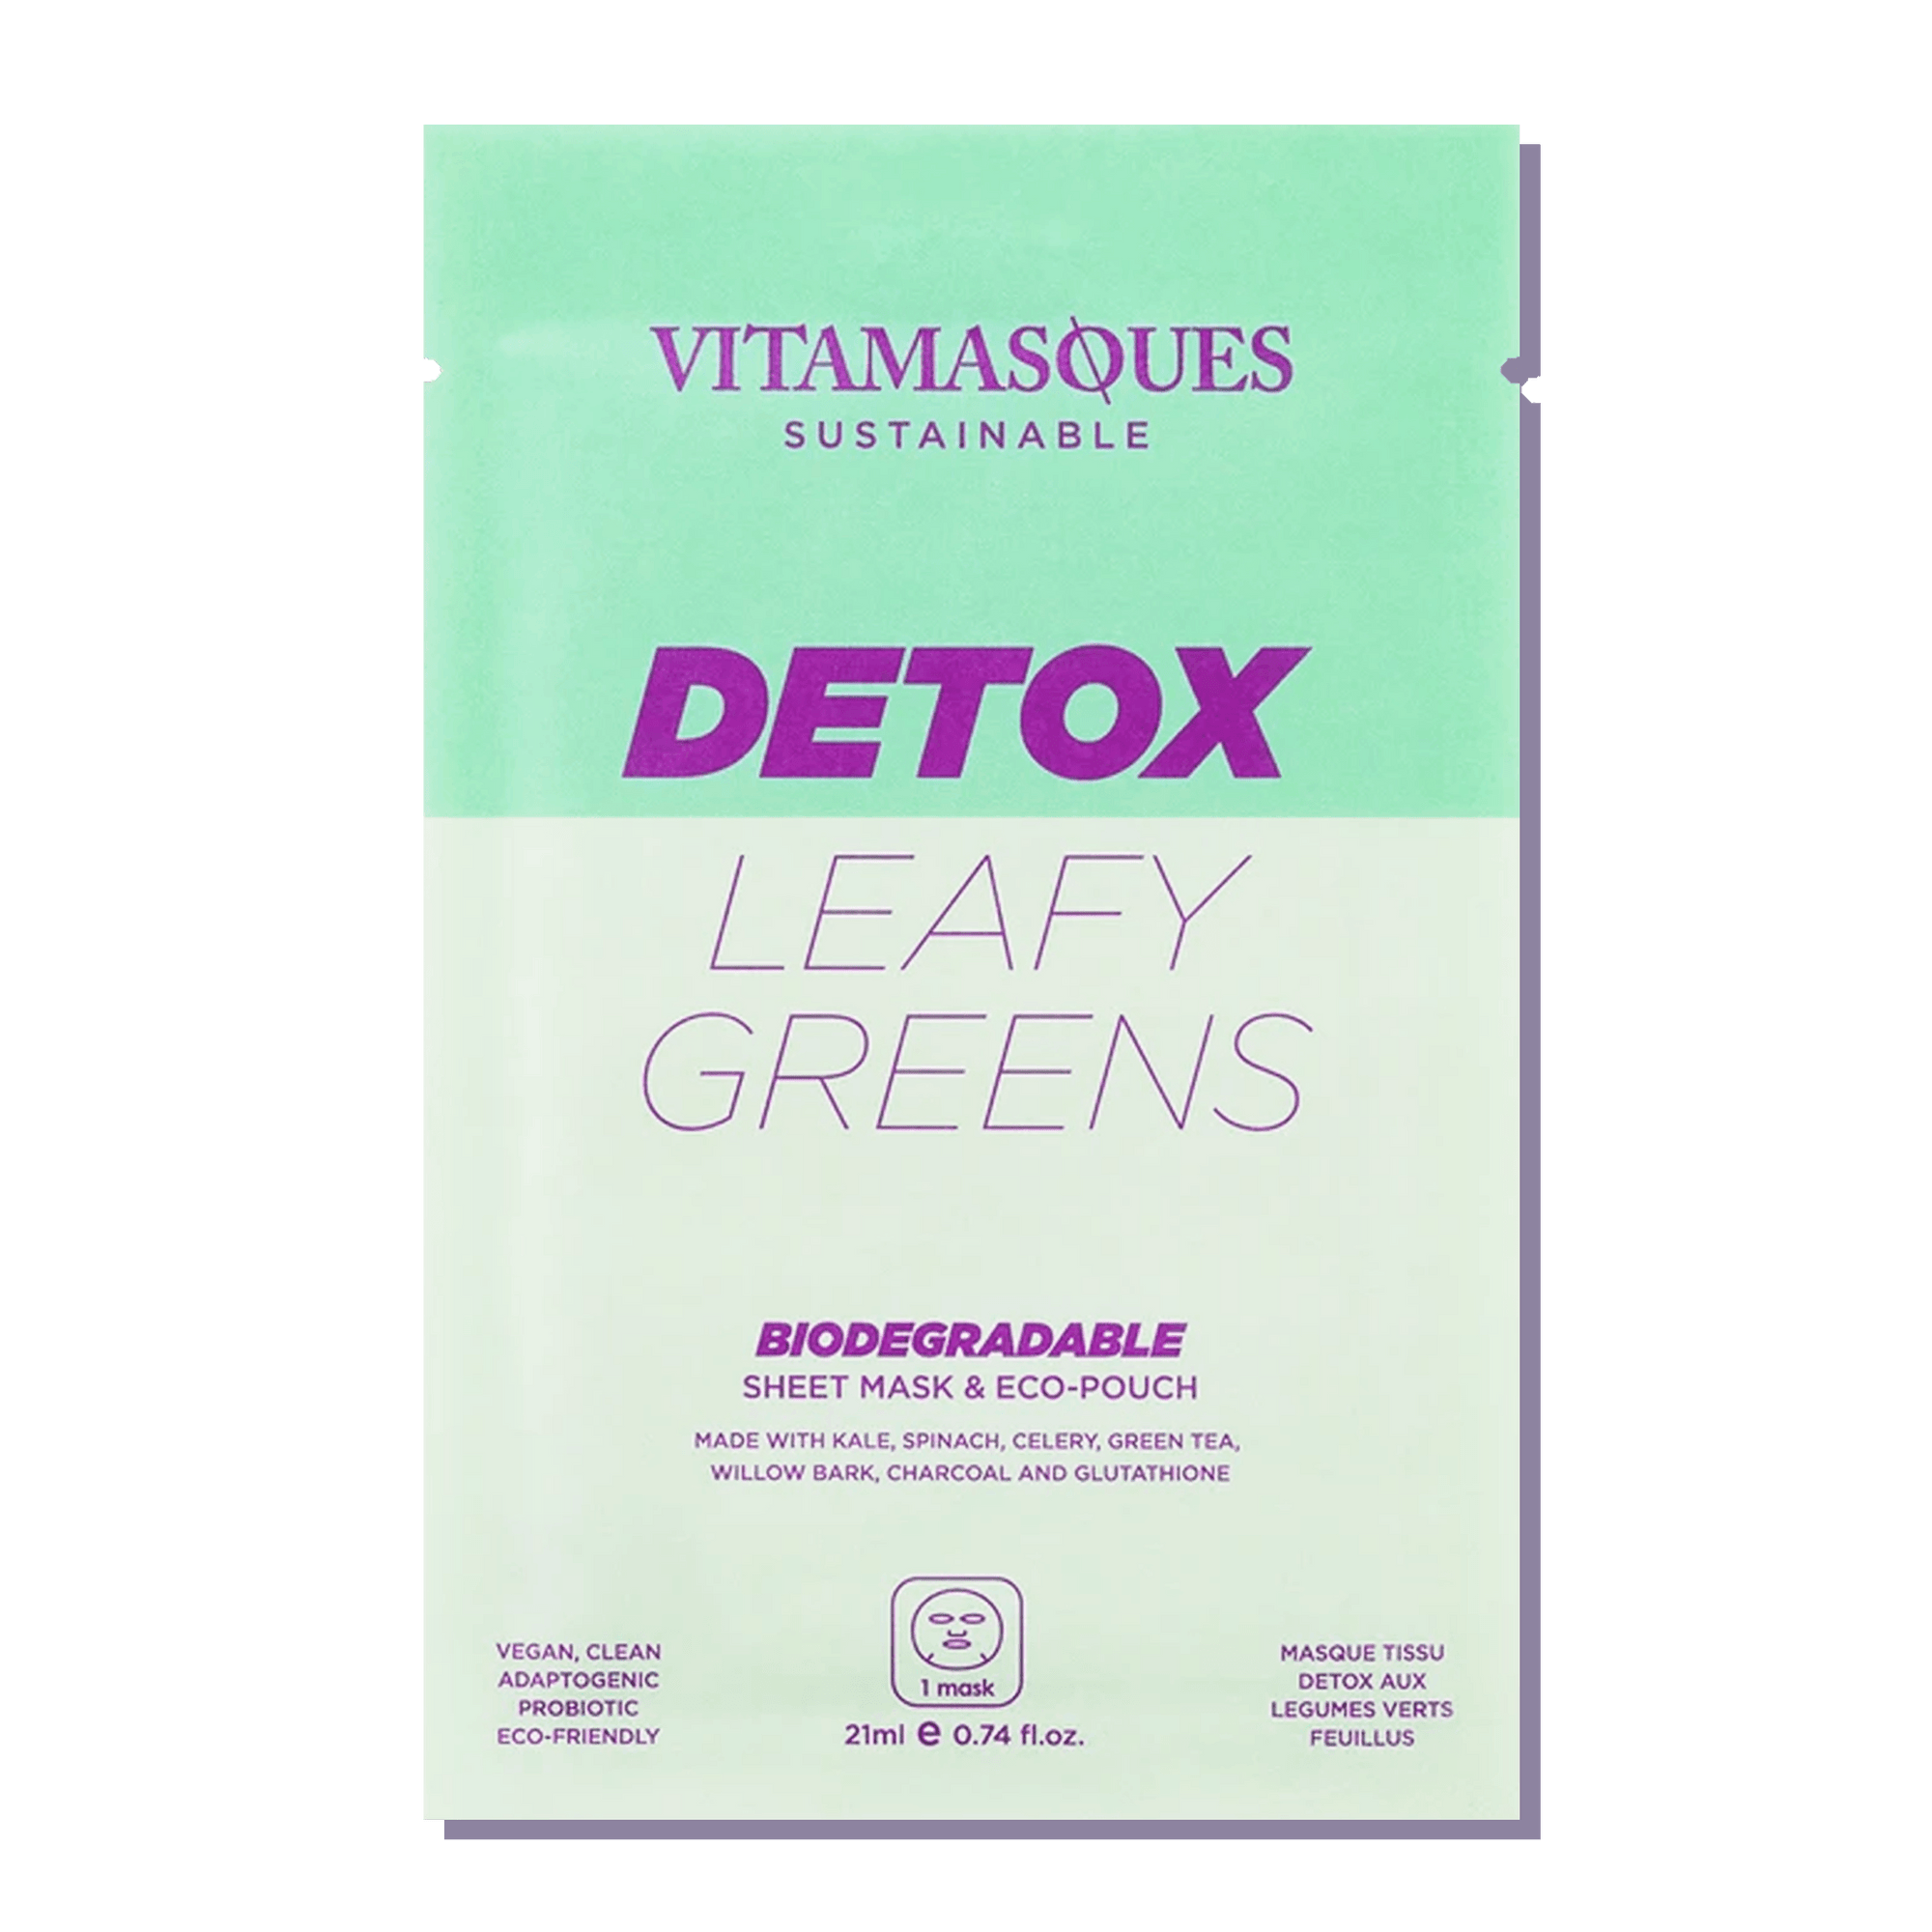 Detox Leafy Greens Biodegradable Face Sheet Mask - Vitamasques